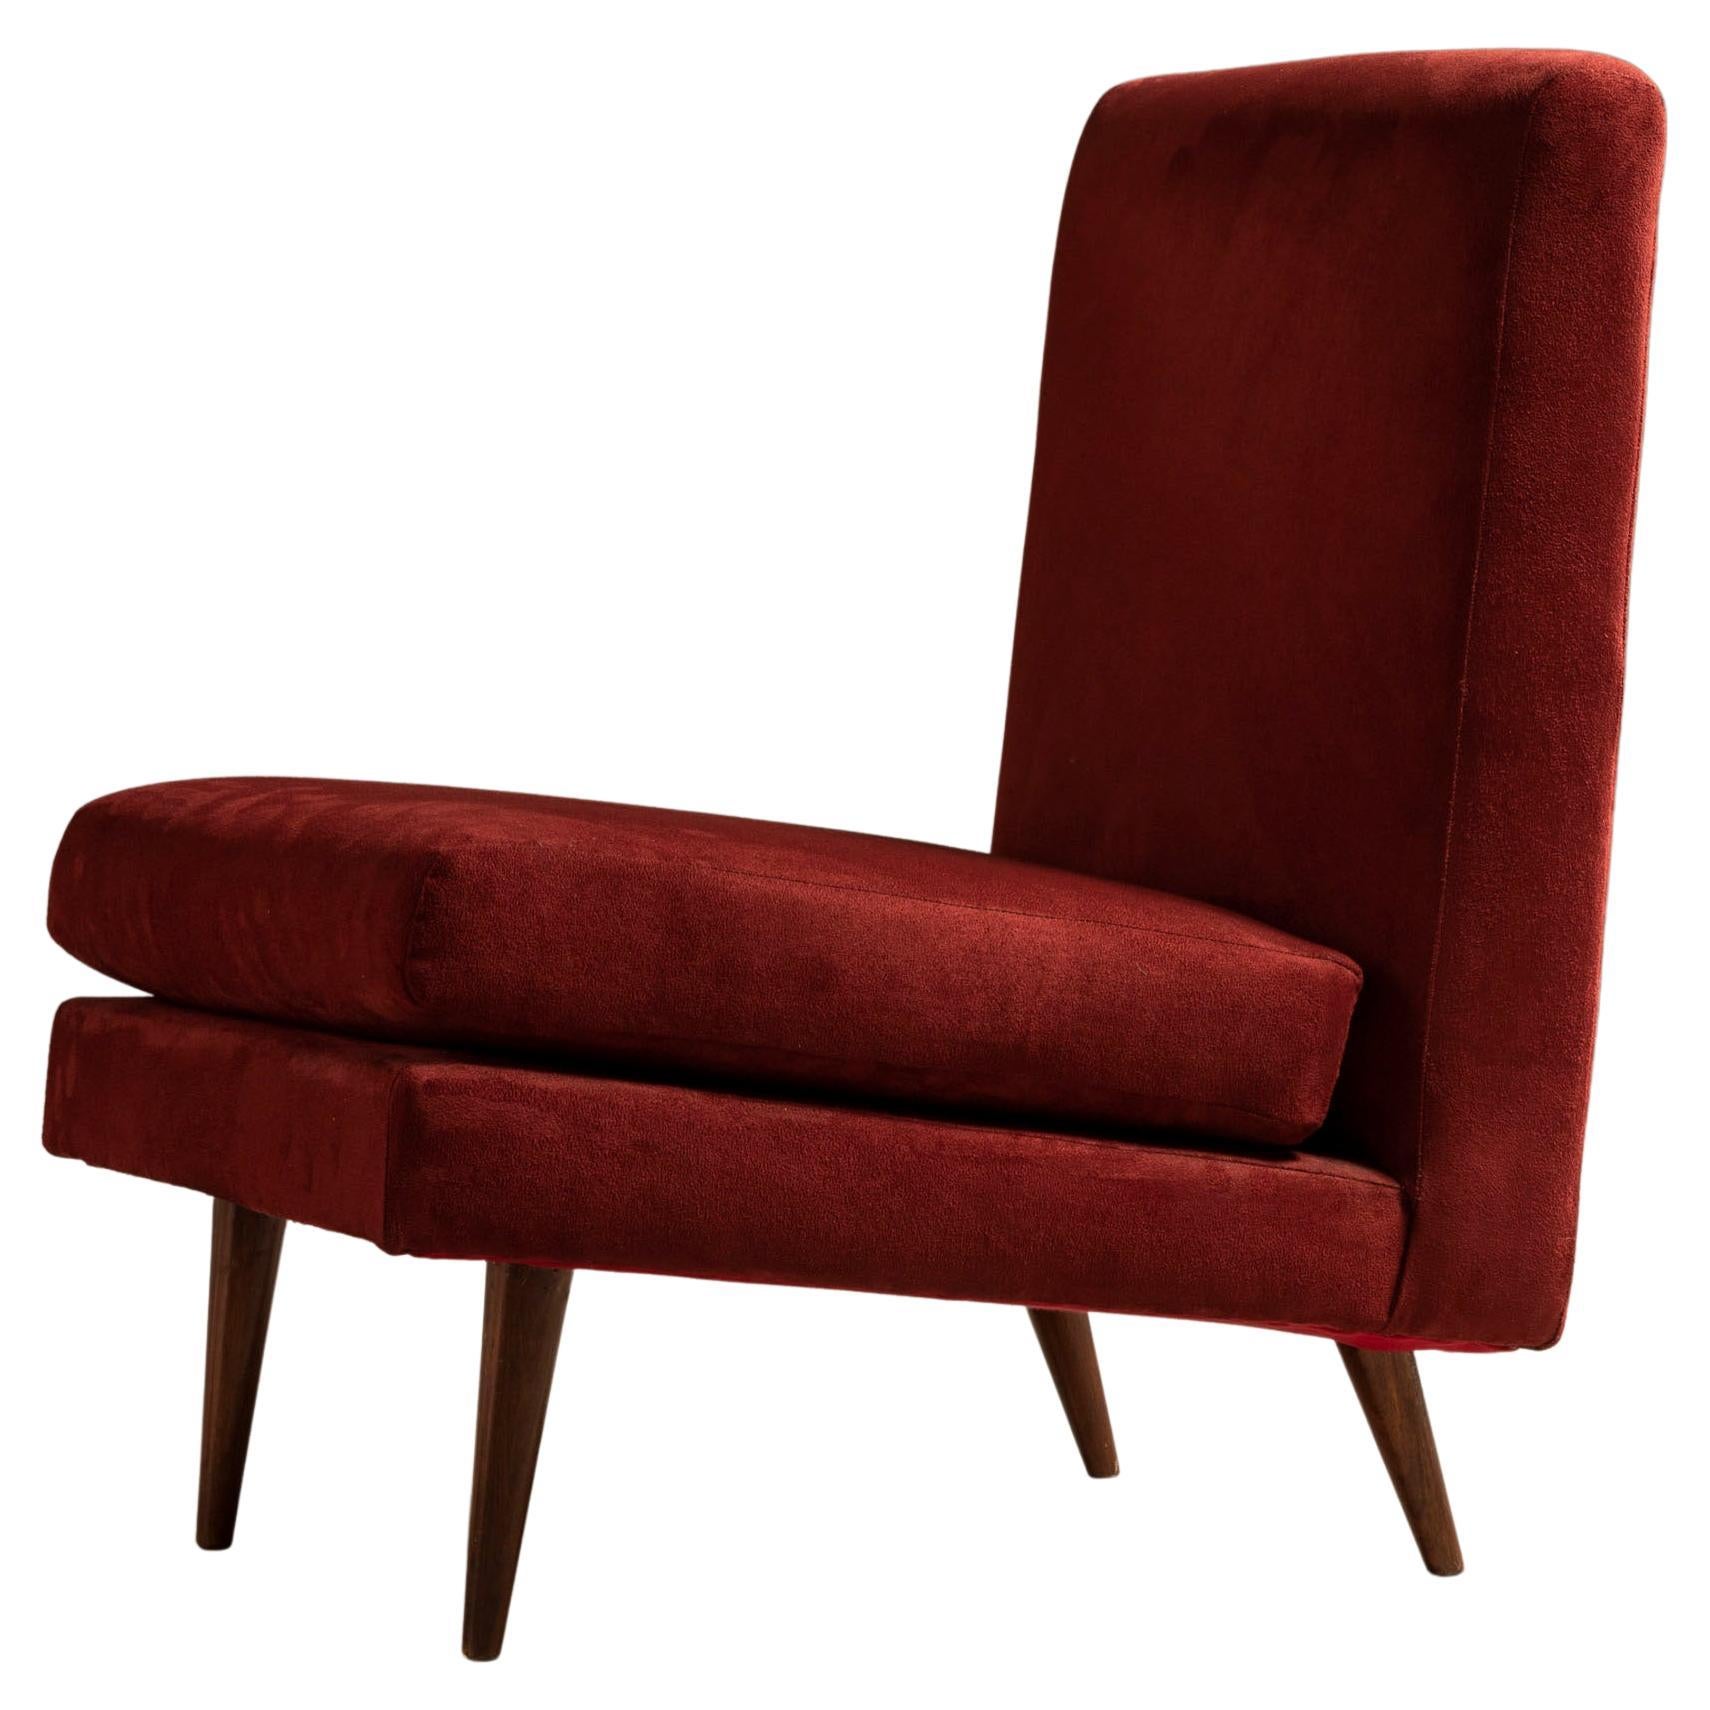 Lounge Chair, by Joaquim Tenreiro, Brazilian Mid-Century Modern